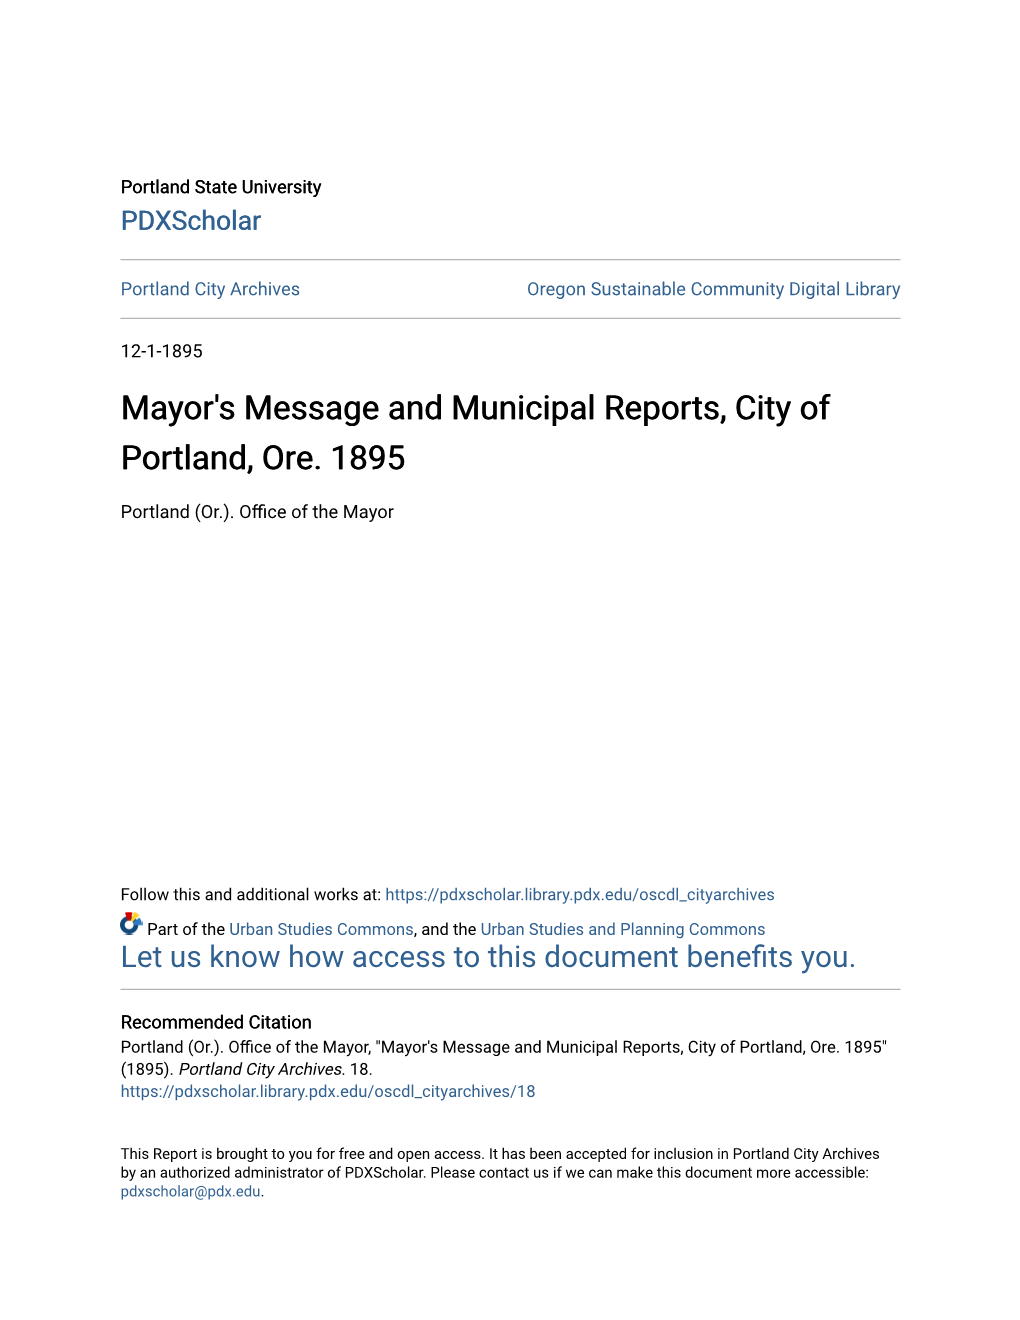 Mayor's Message and Municipal Reports, City of Portland, Ore. 1895